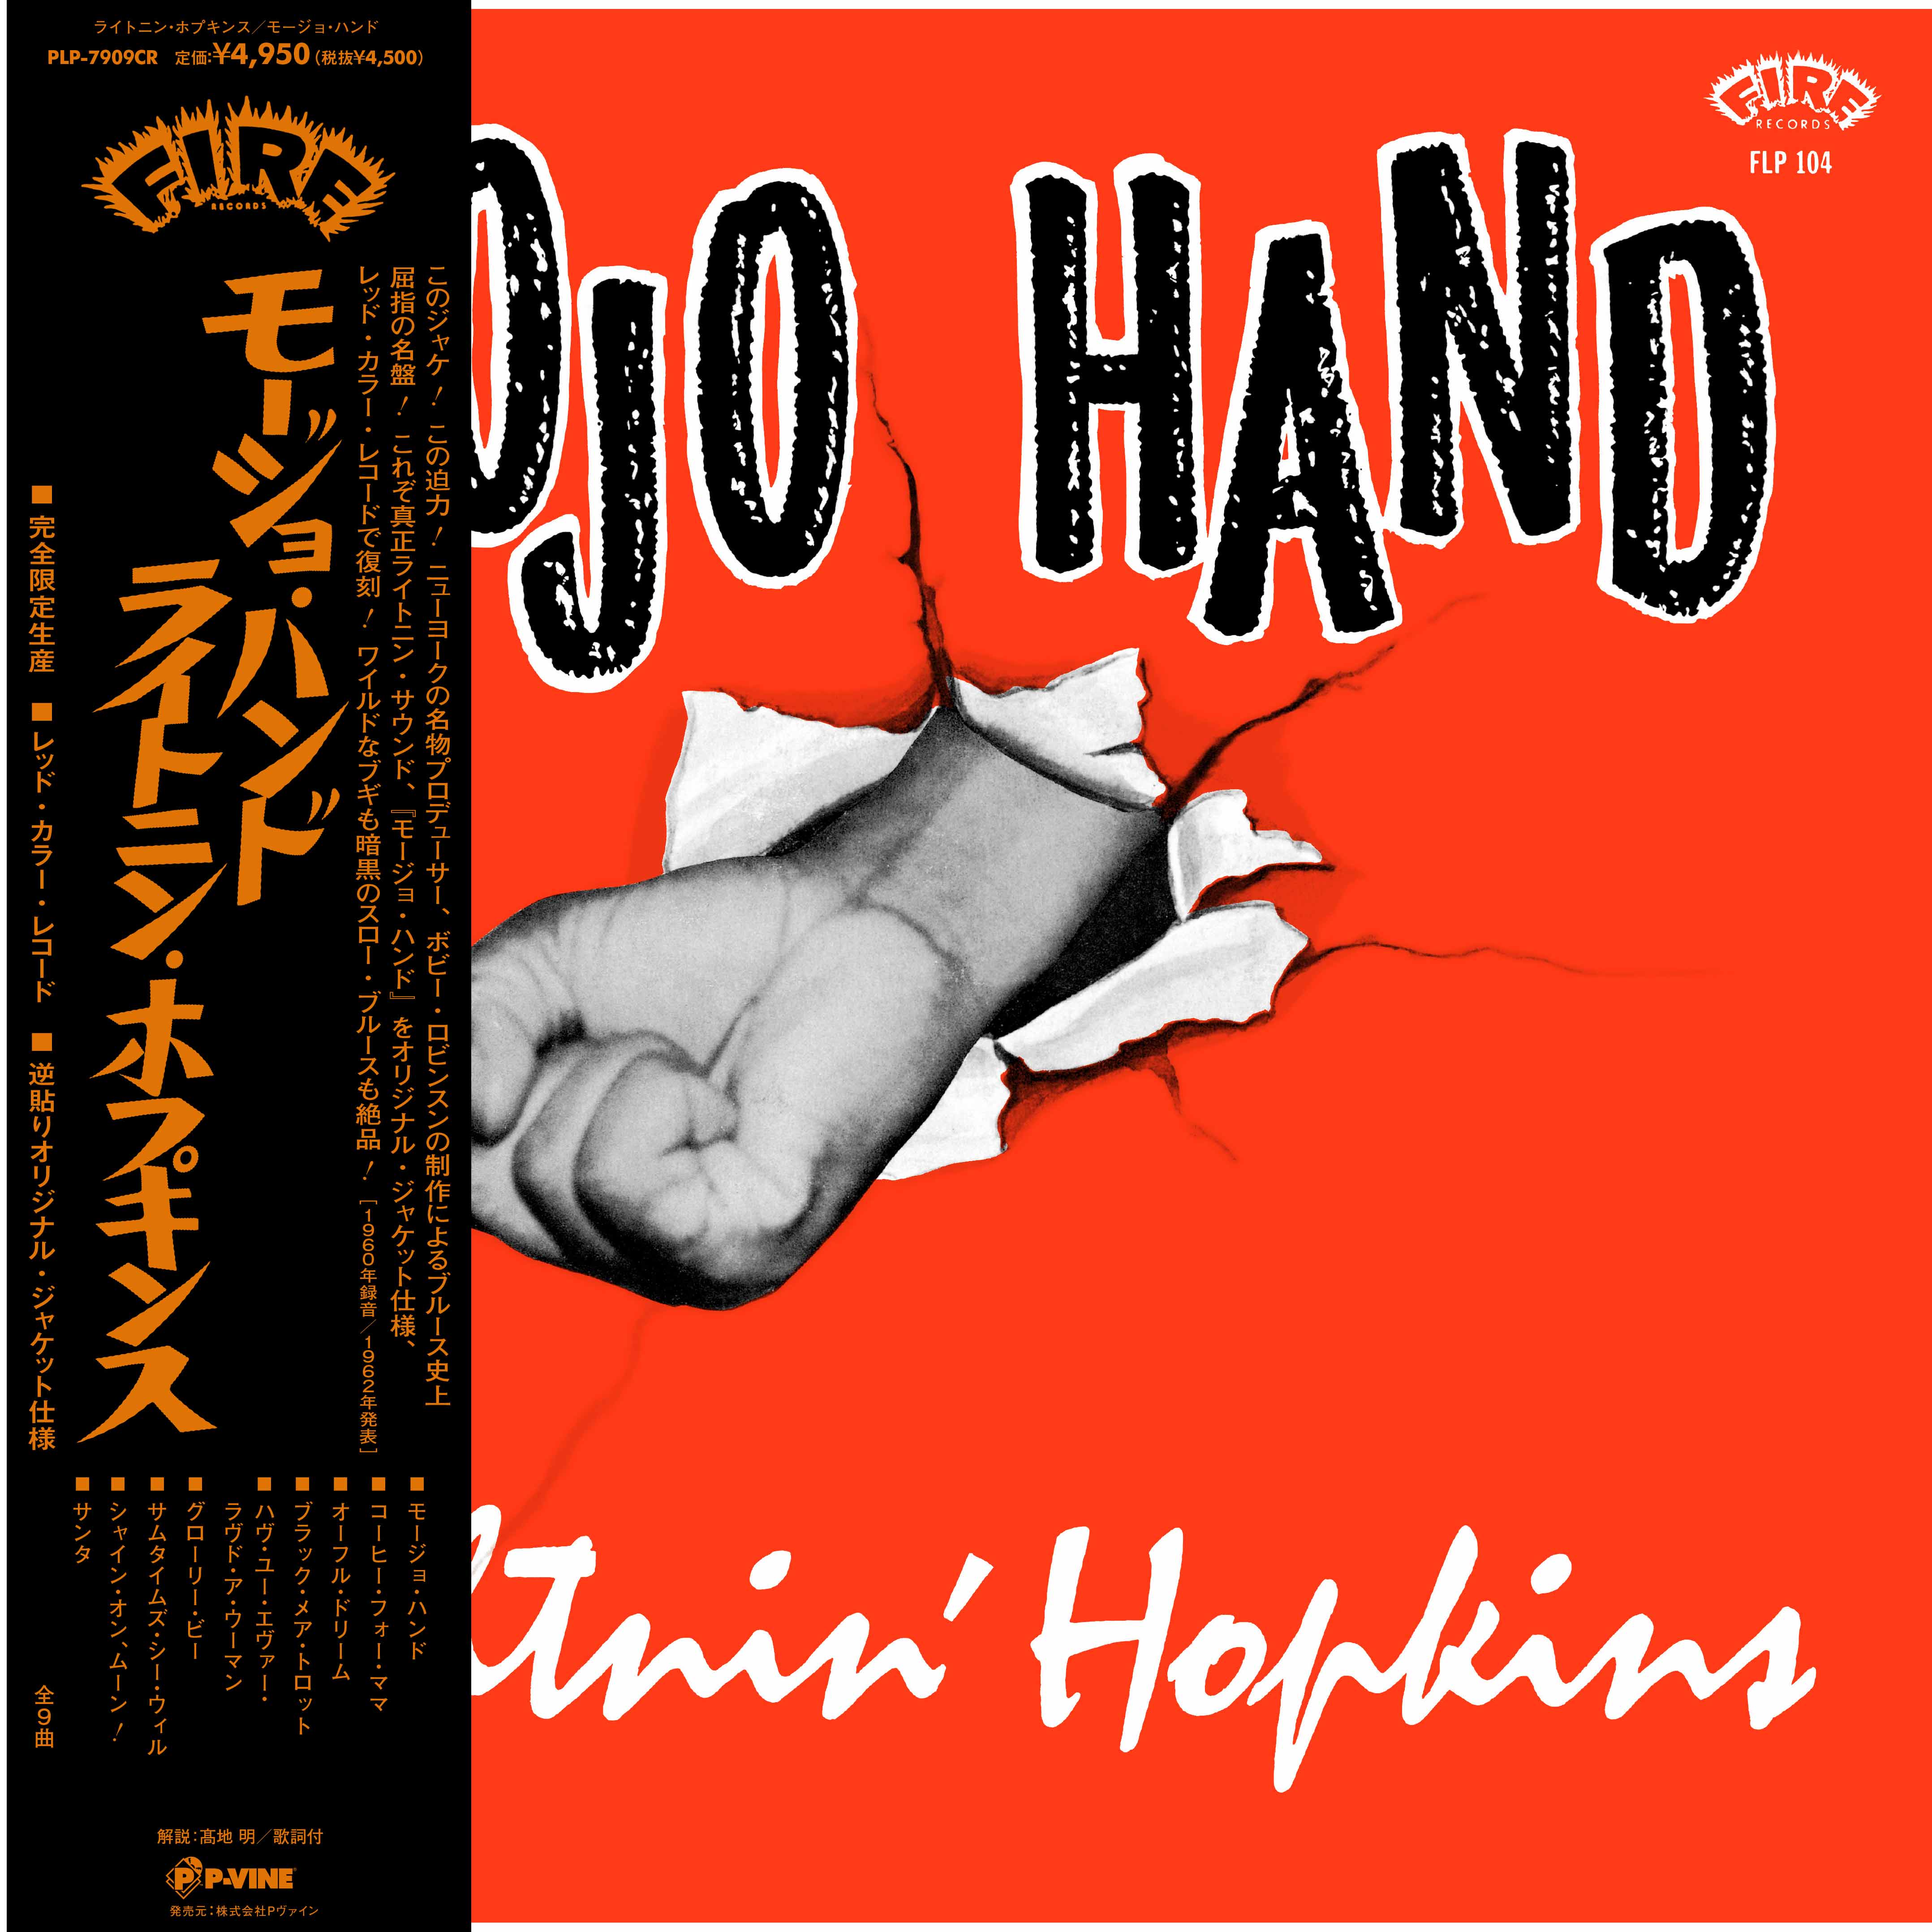 LIGHTNIN' HOPKINS「Mojo Hand」